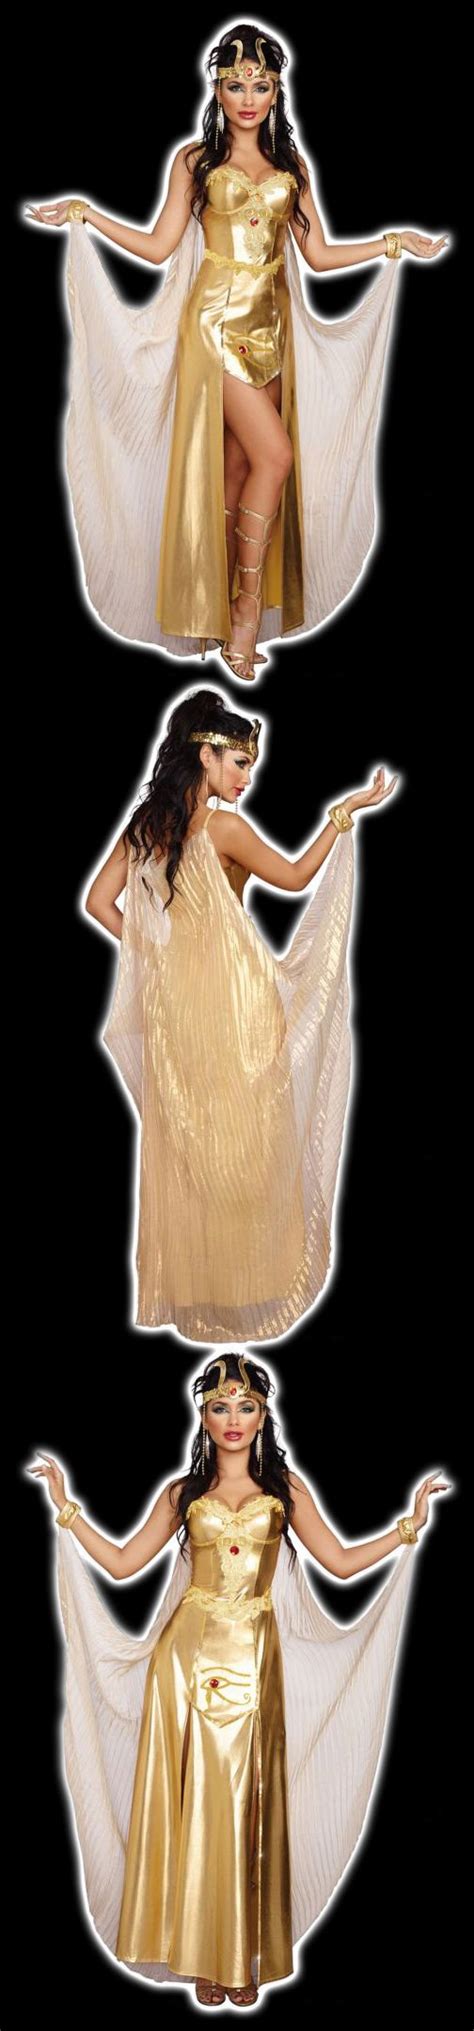 hathor egyptian goddess of love and fertility adult costume